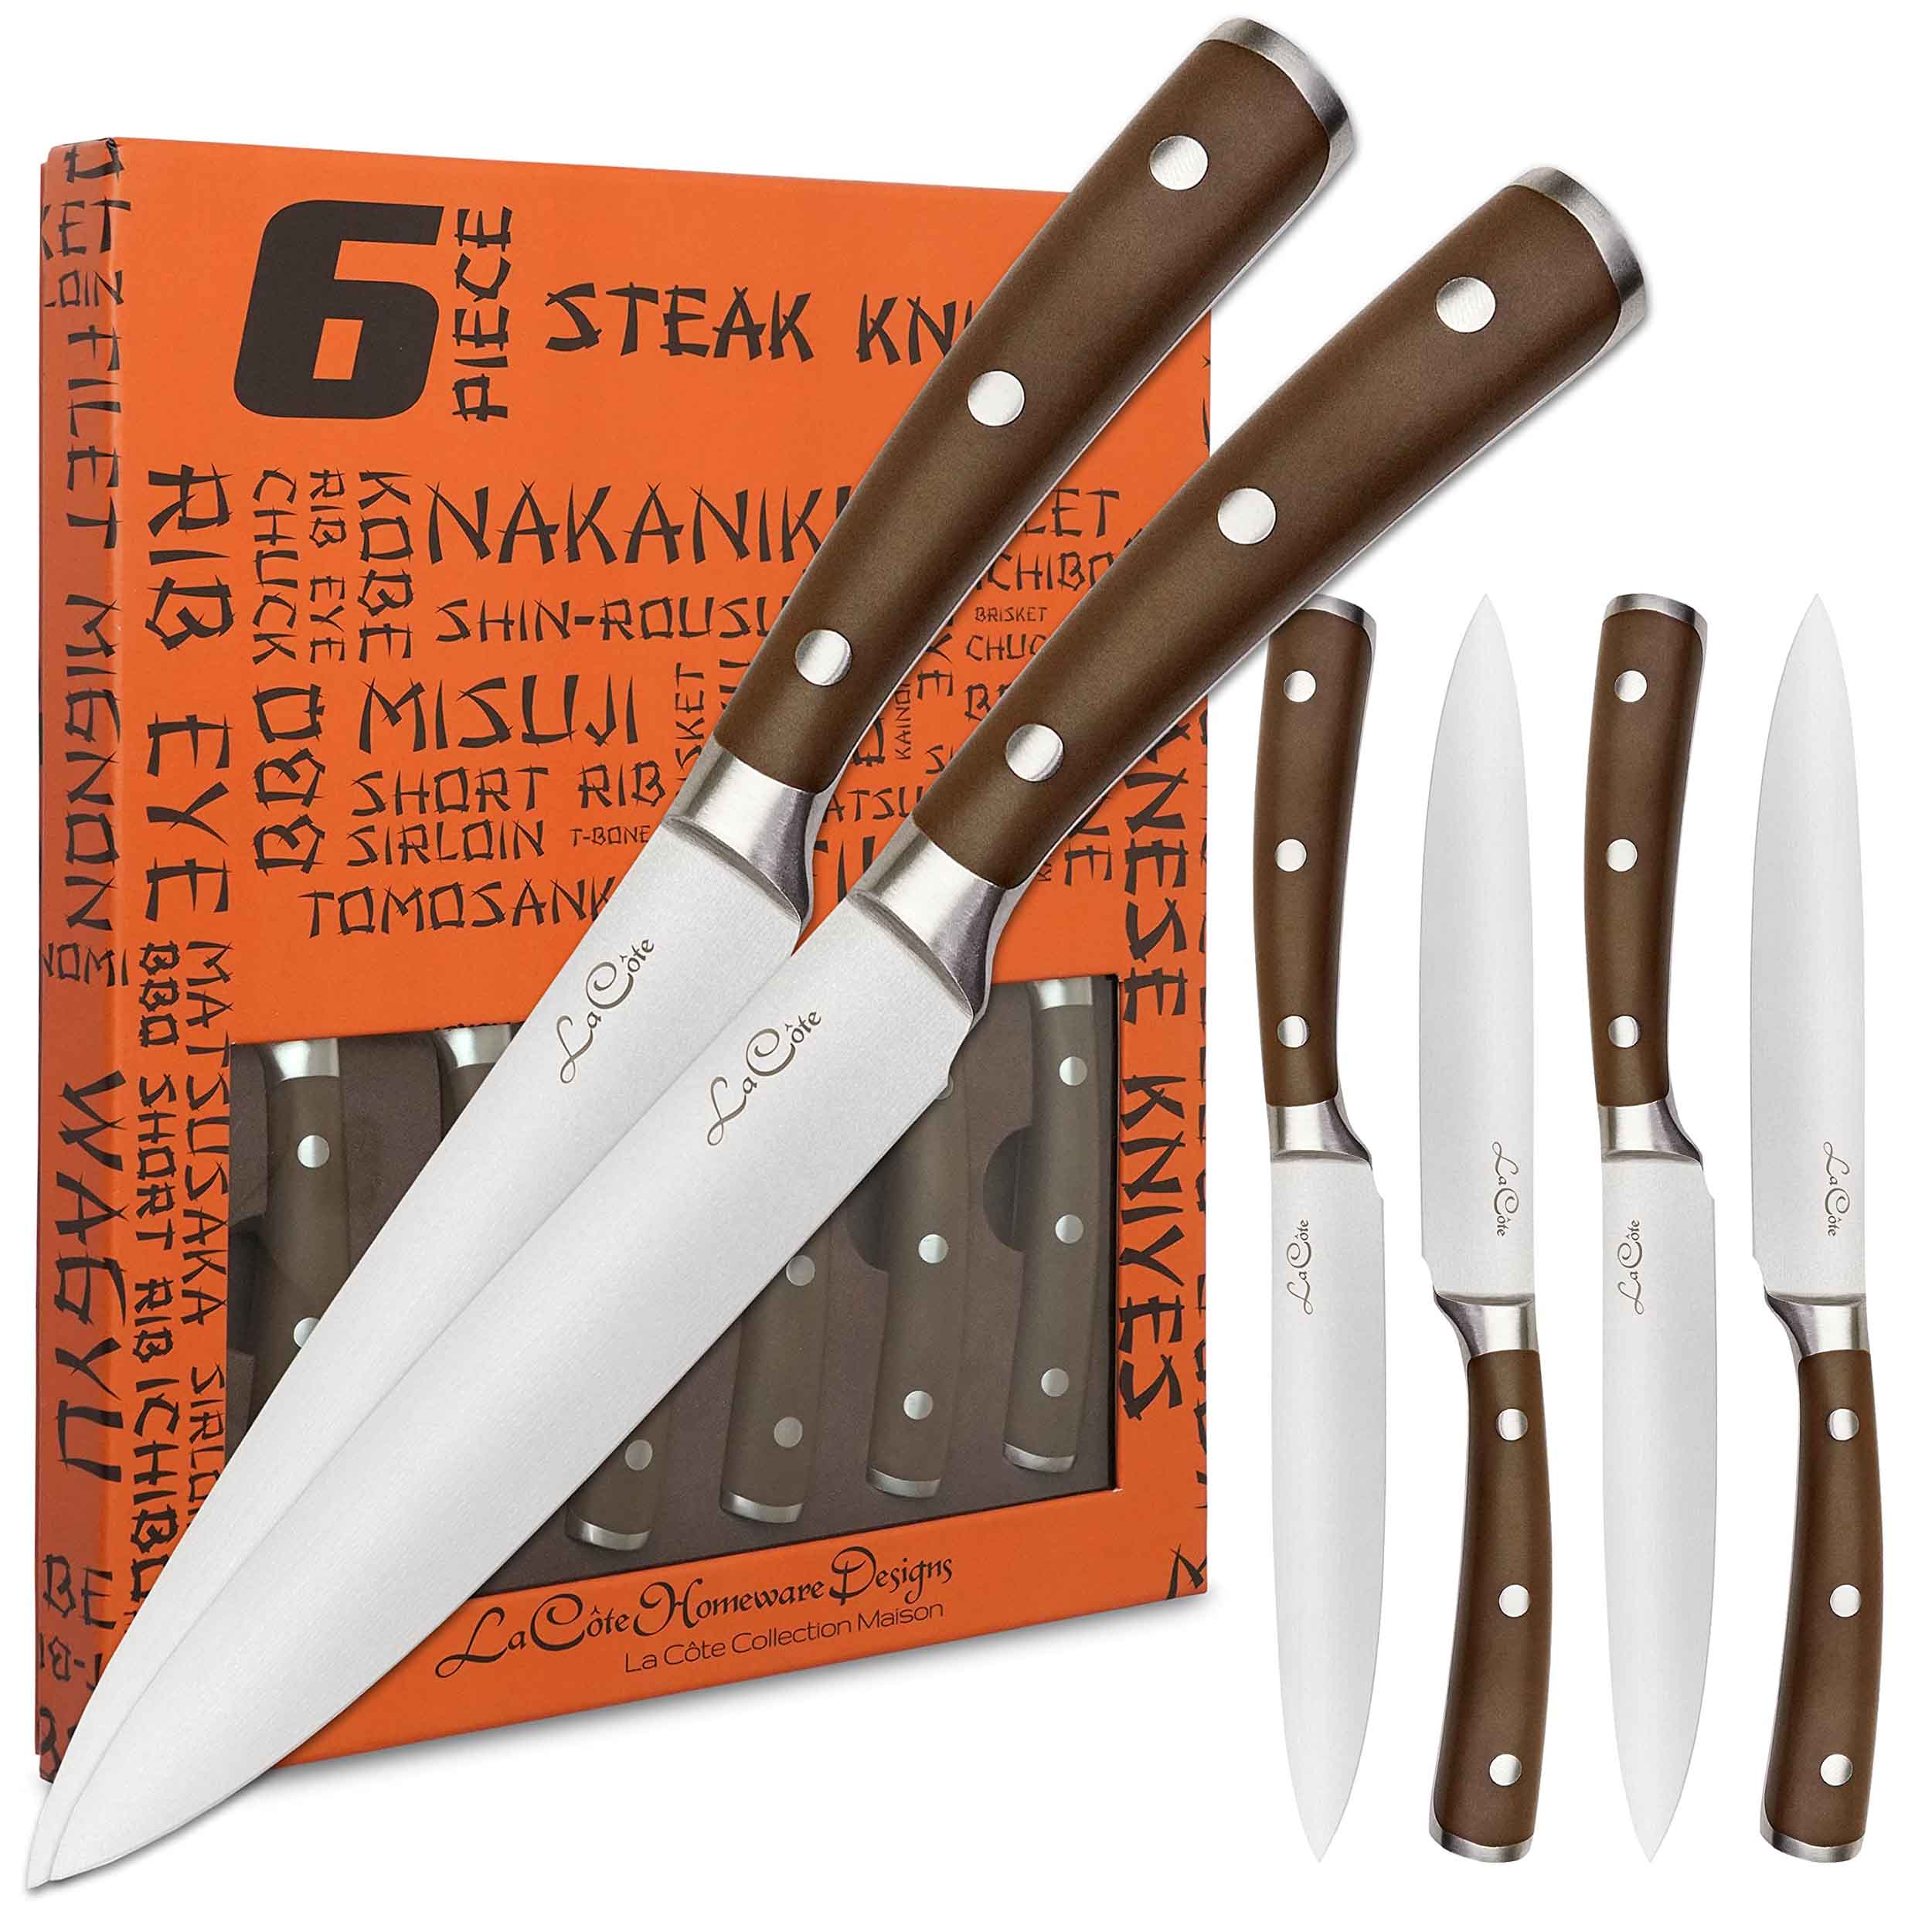 6 Piece Steak Knives Set Japanese Steel straight edge blades in Gift Box